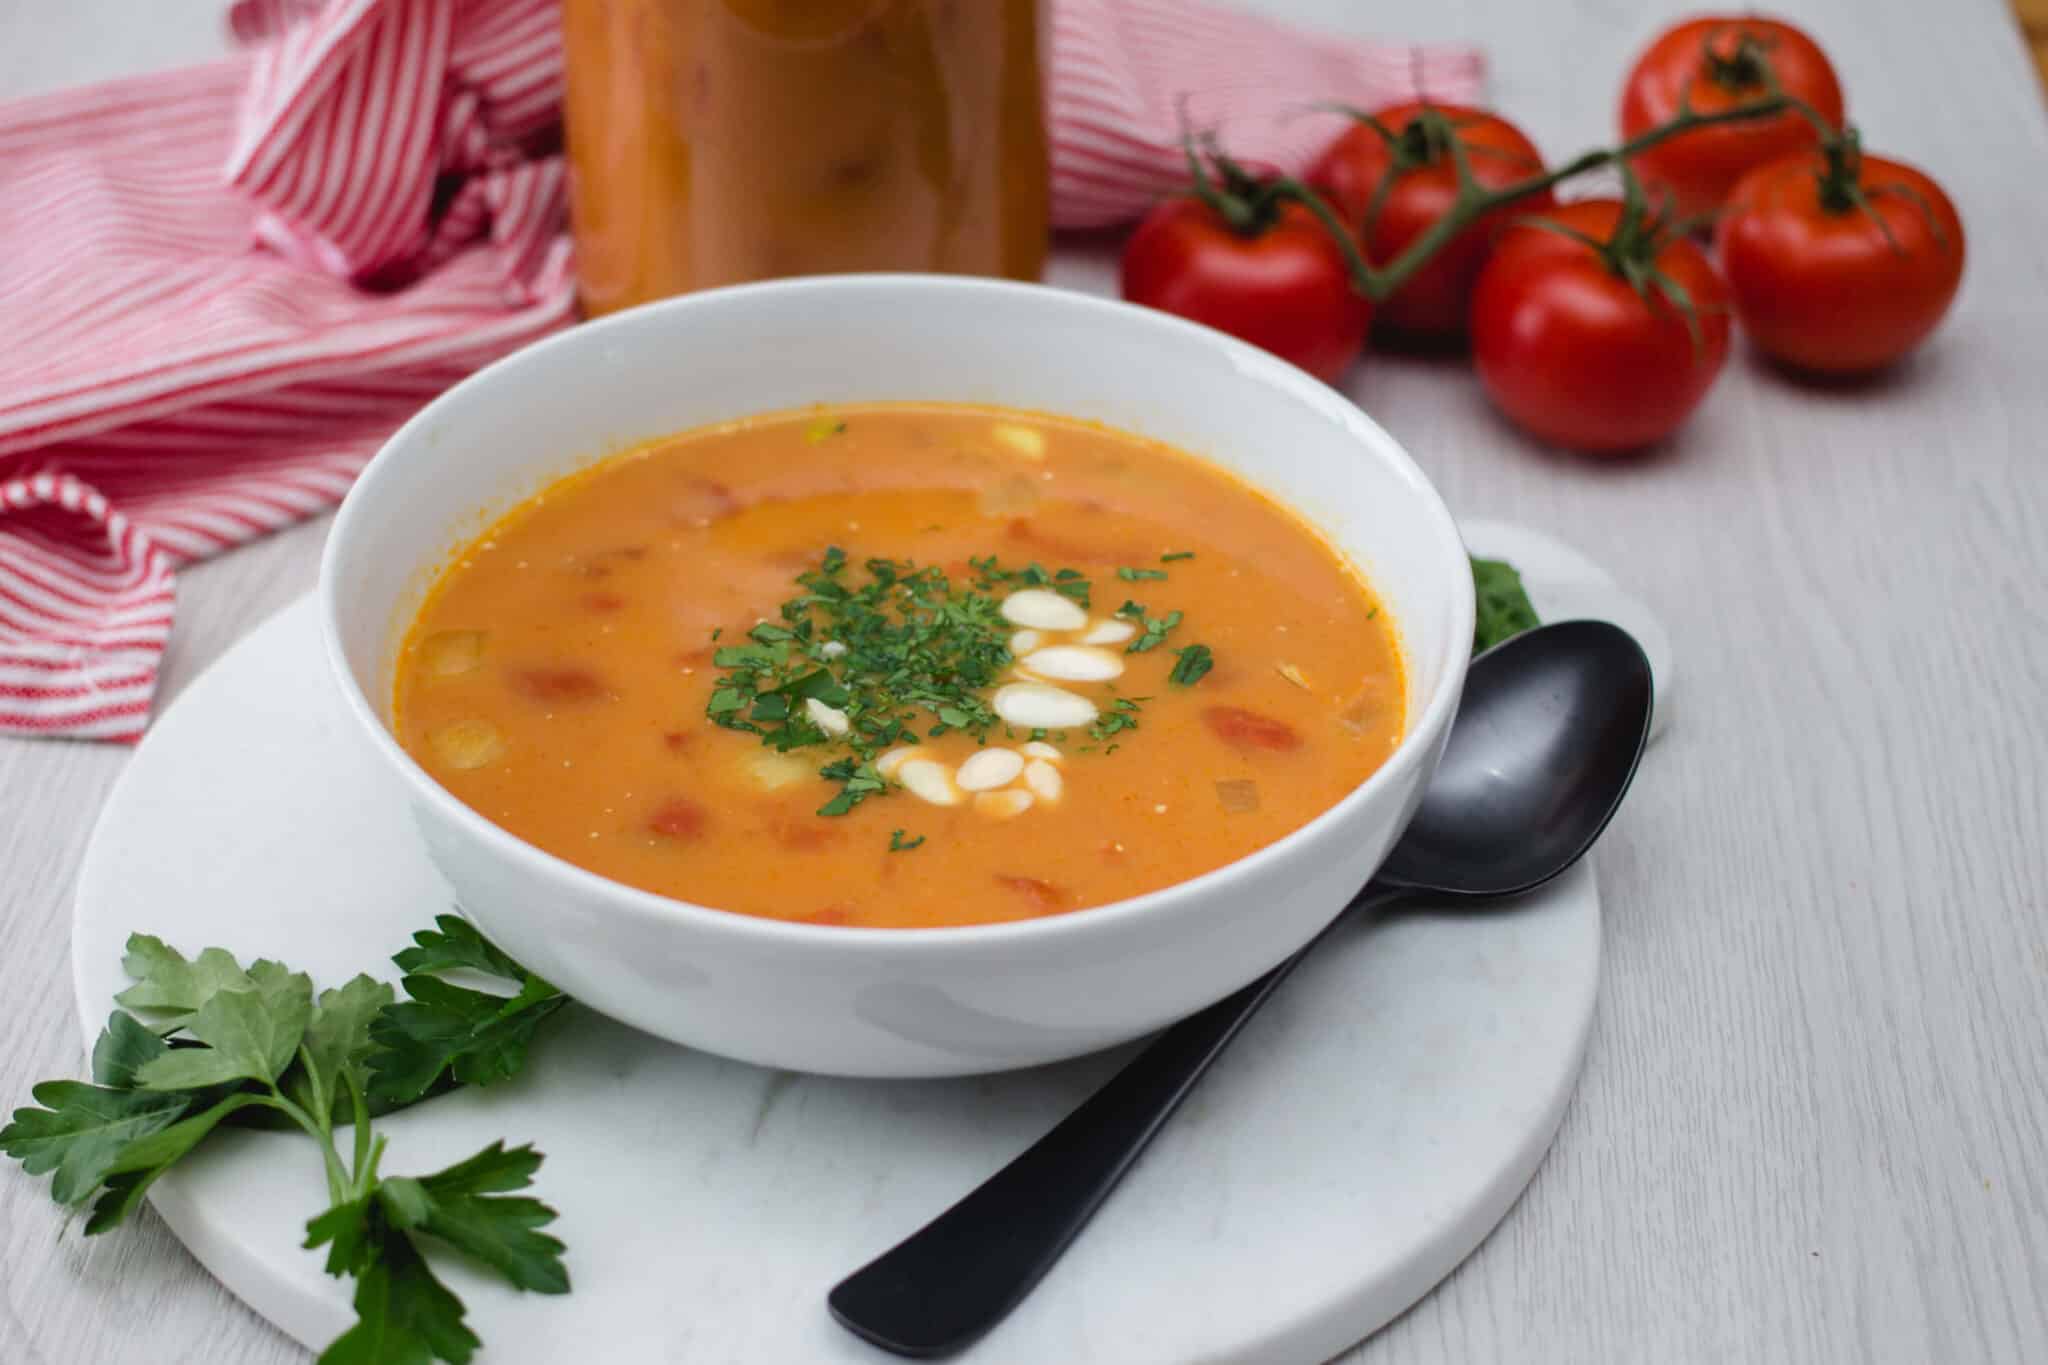 Homemade Cream of Tomato Soup